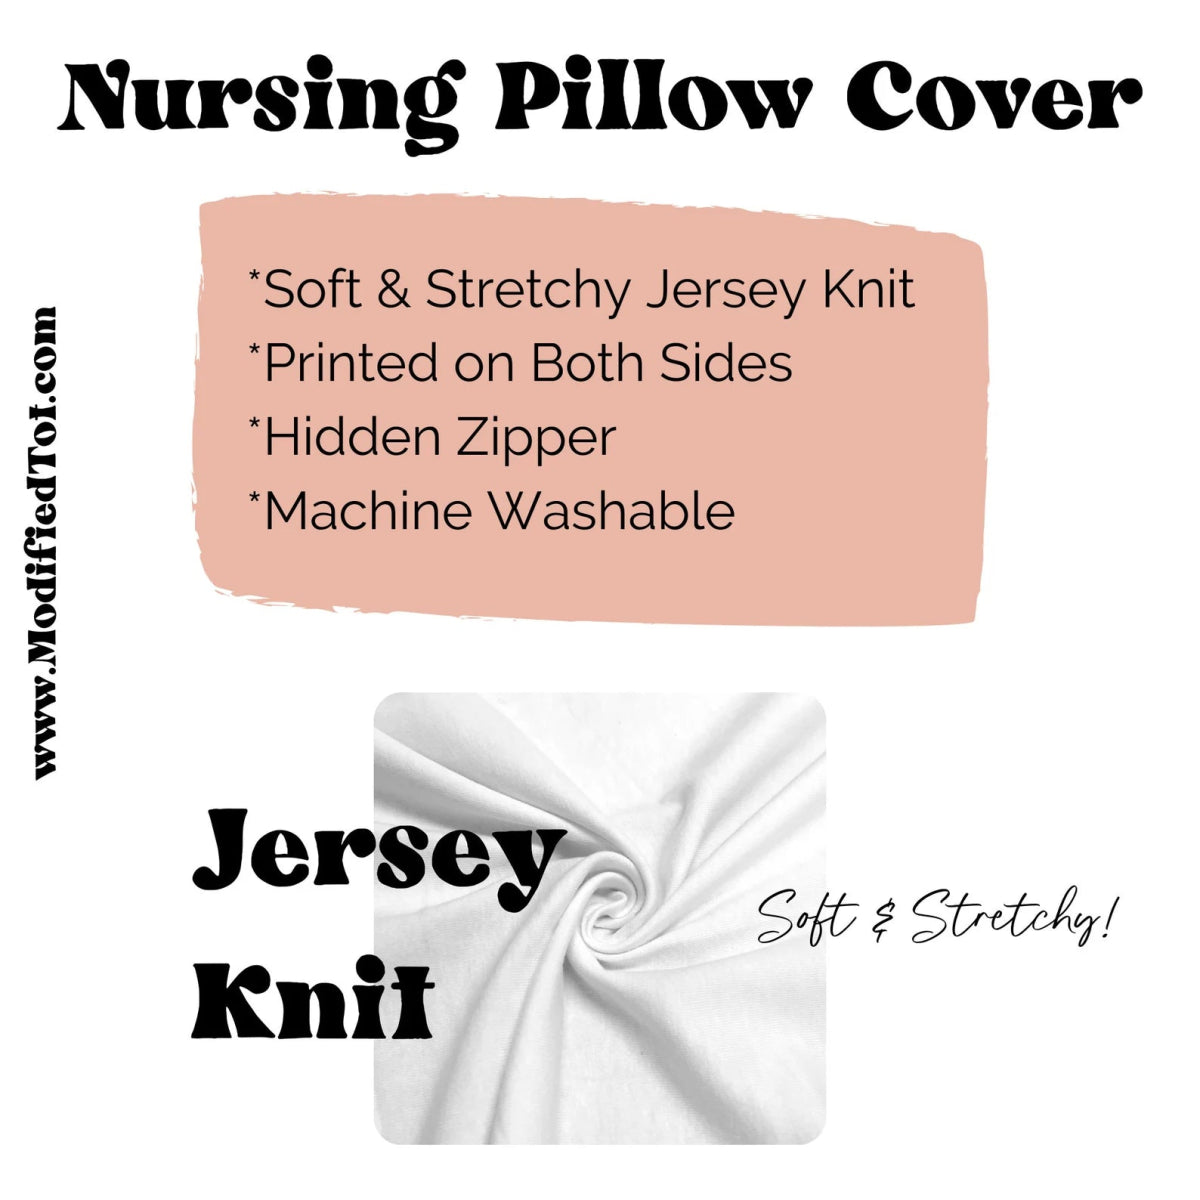 Floral Jungle Nursing Pillow Cover - Floral Jungle, gender_girl, Theme_Floral